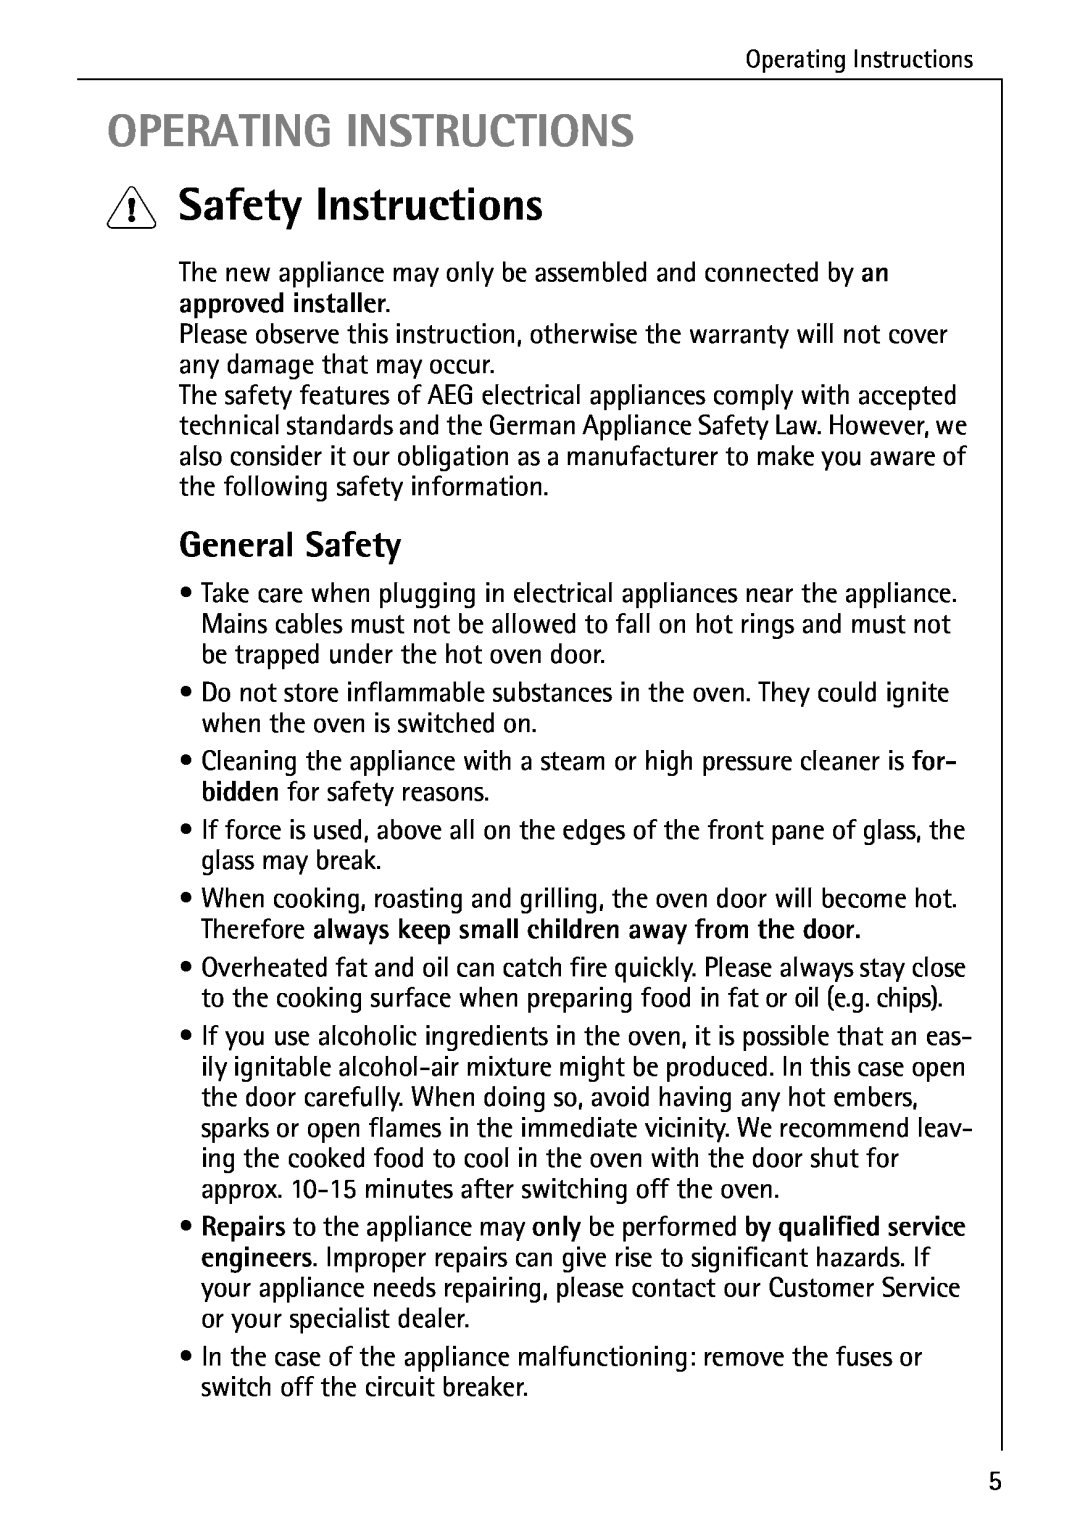 AEG 2003 F operating instructions Operating Instructions, Safety Instructions, General Safety 